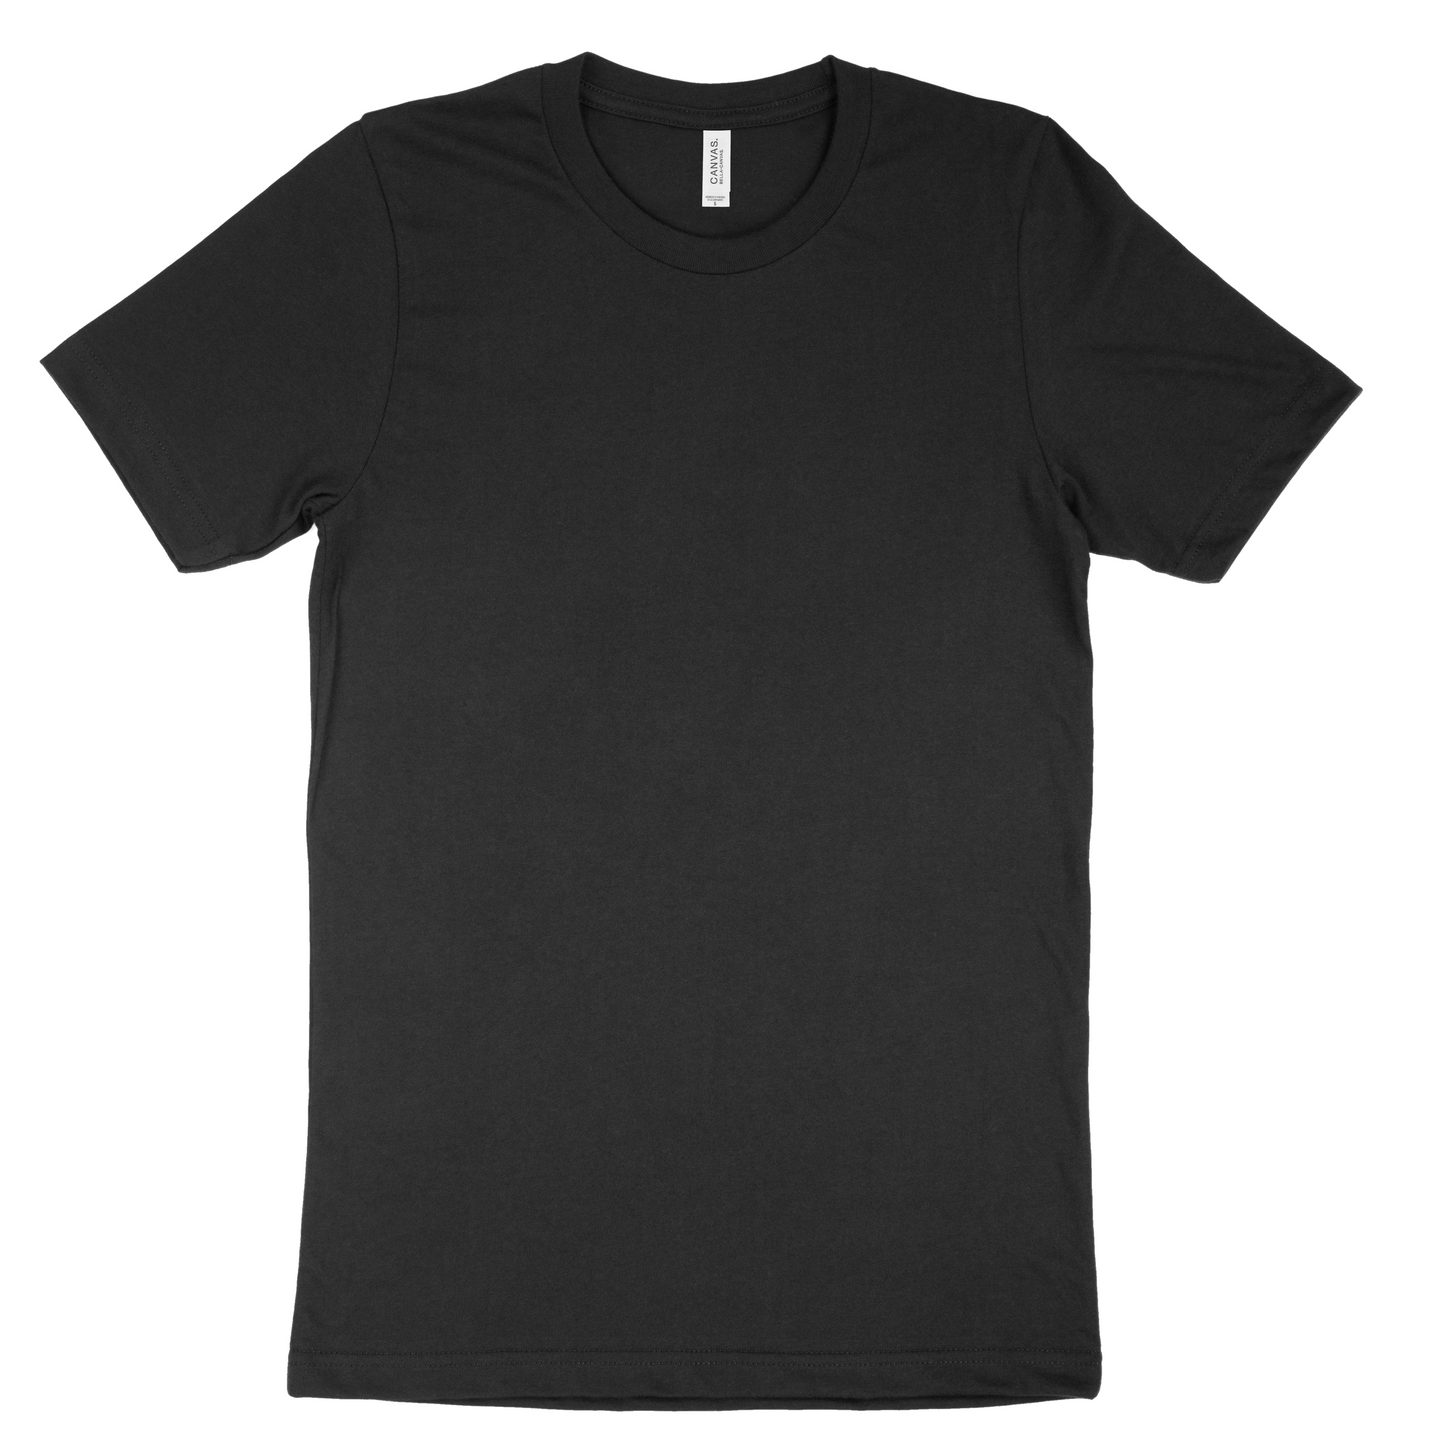 MerchBlue Union-Printed Custom T-Shirt - Custom Image Plus Text